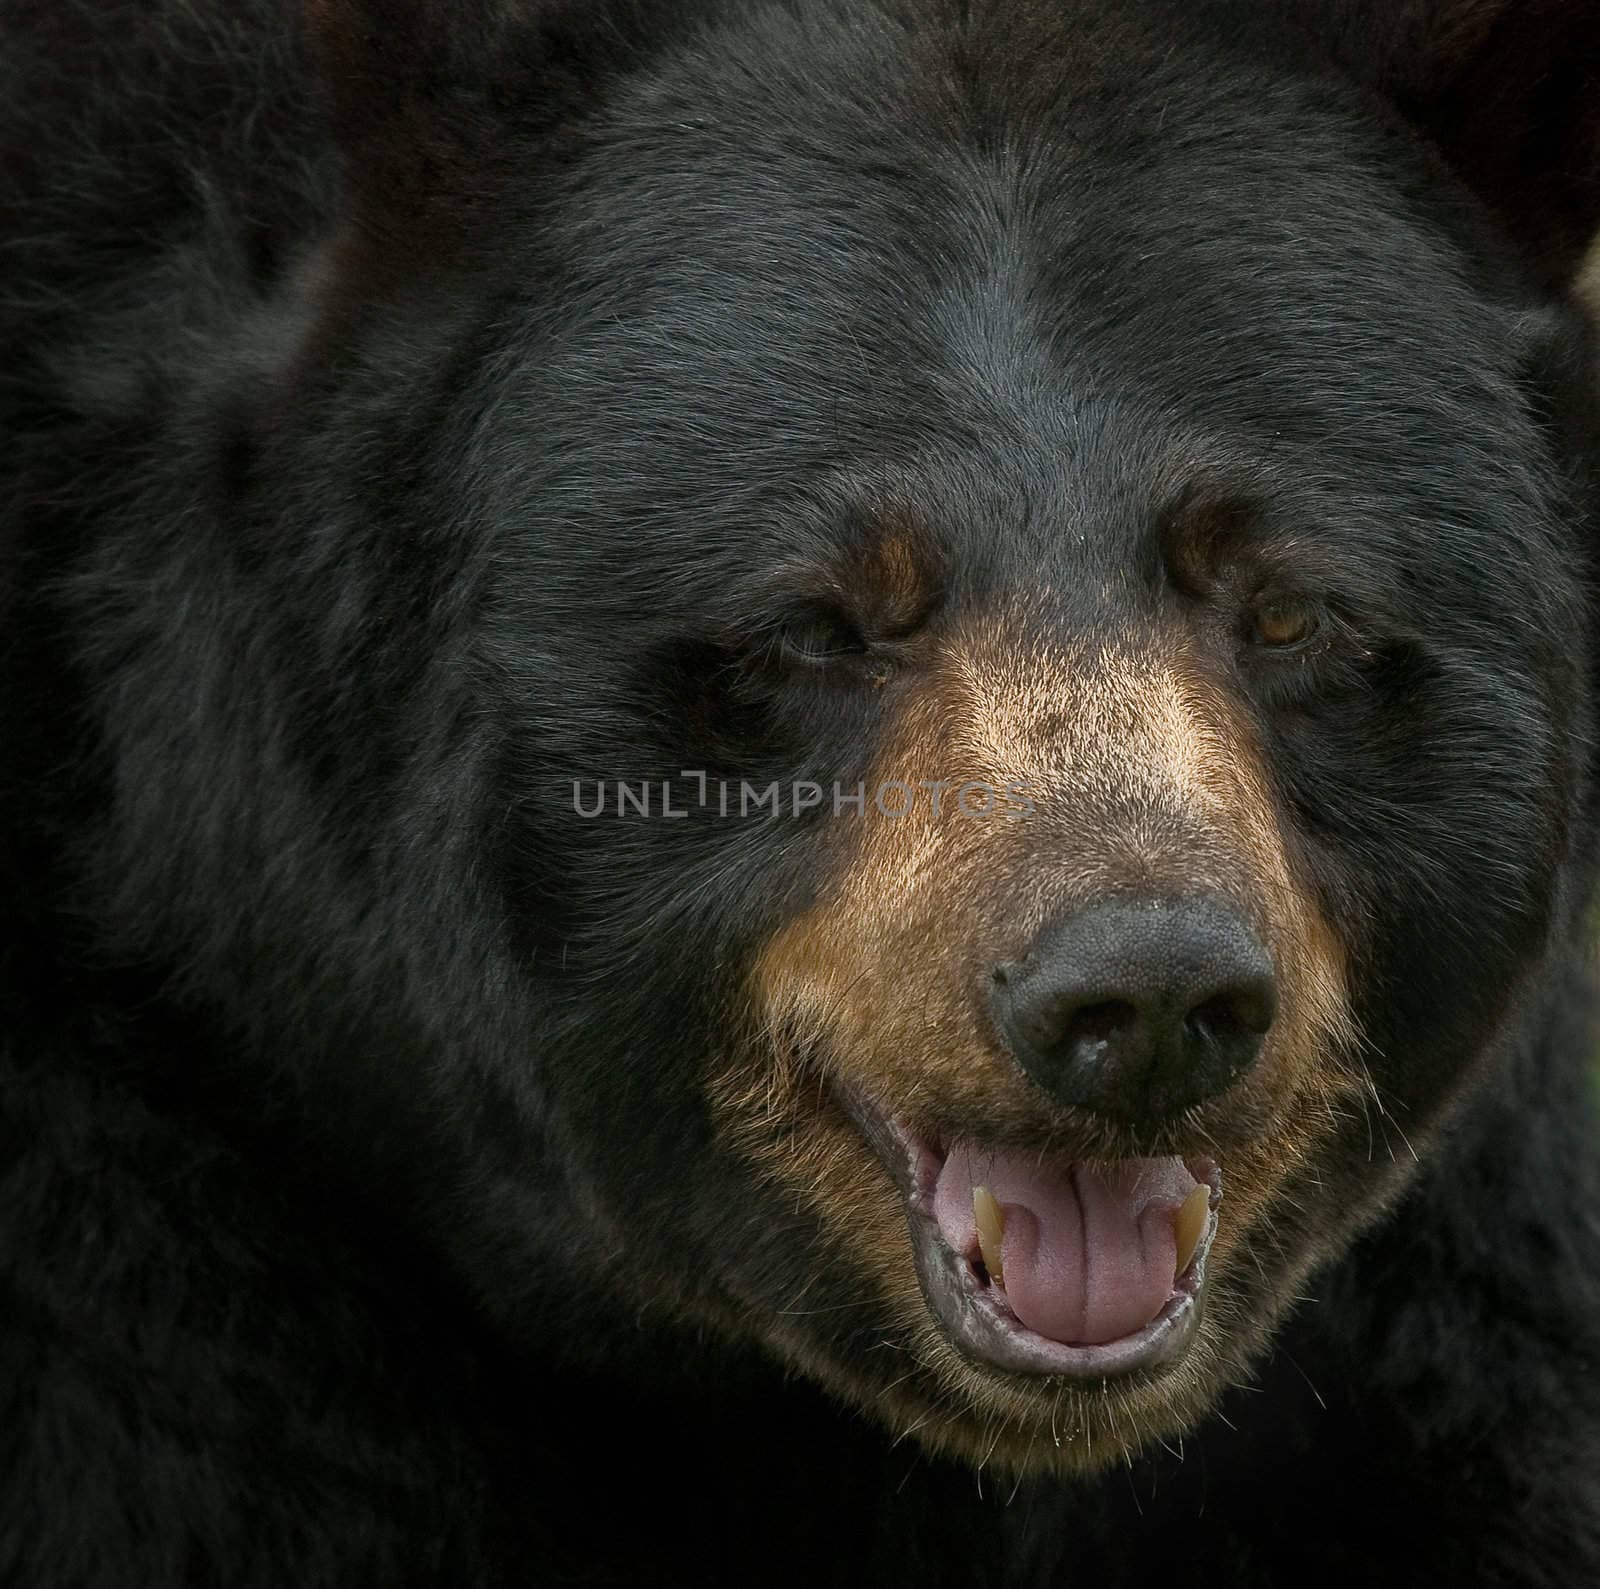 Extreme closeup portrait of a big black bear